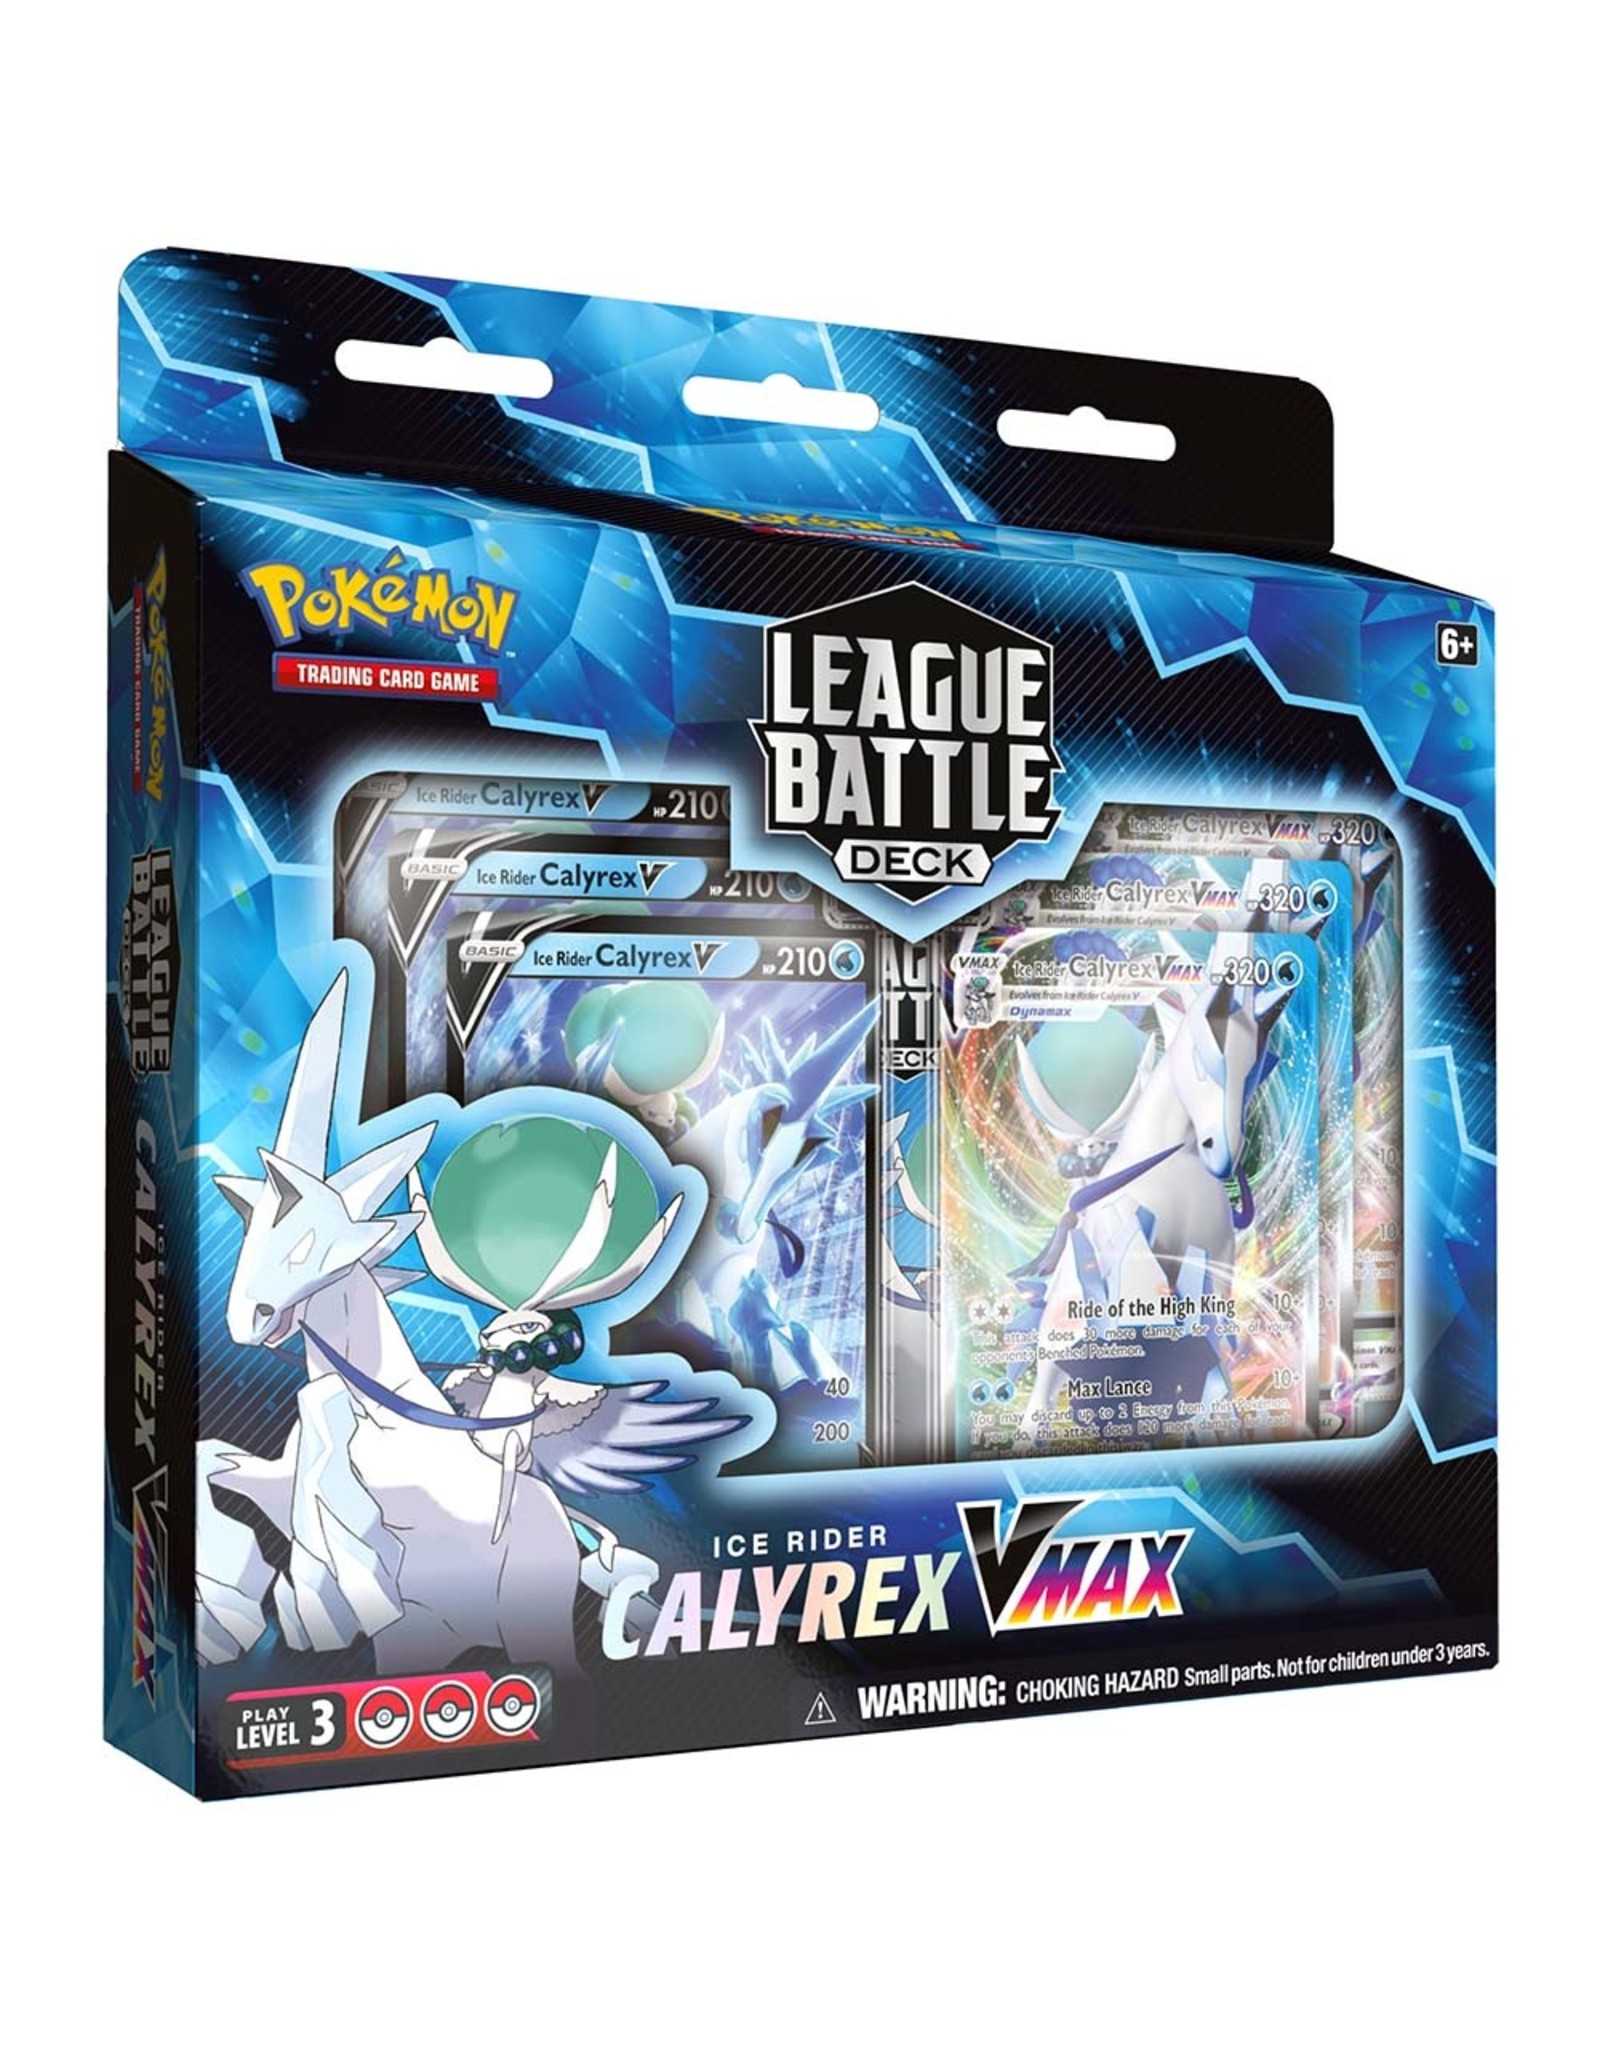 Pokemon Company Pokémon TCG: Calyrex VMAX League Battle Deck